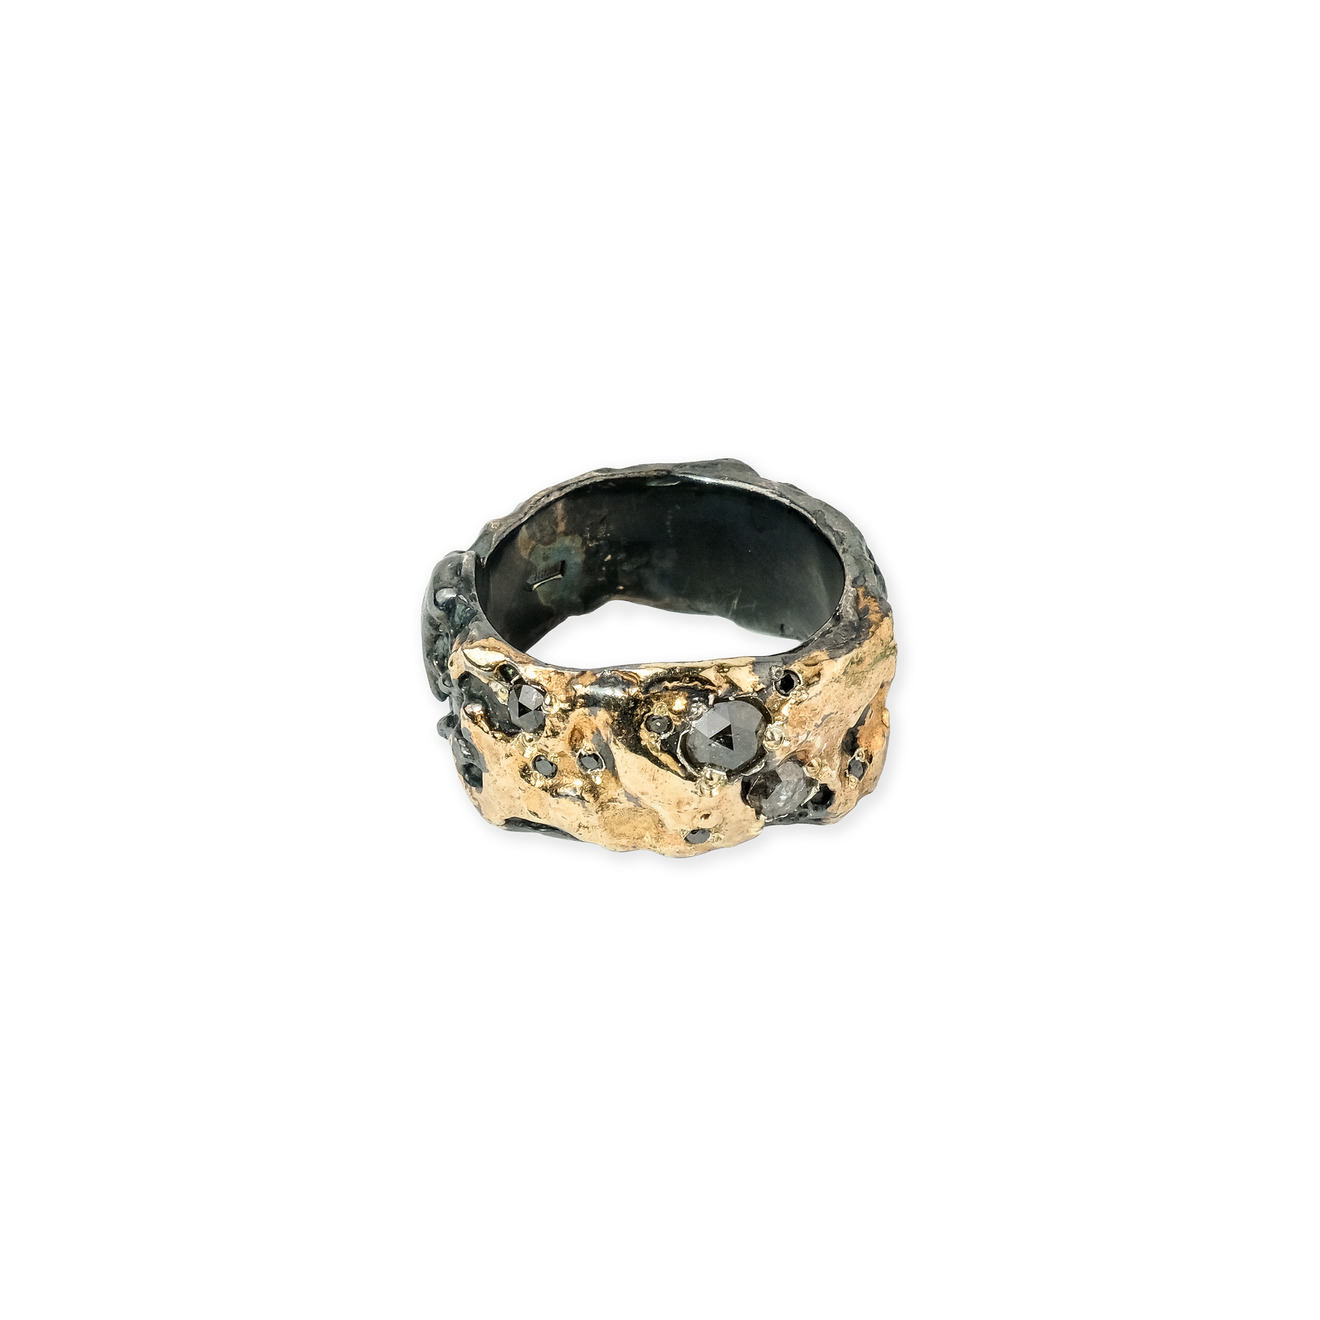 Kintsugi Jewelry Кольцо My way из серебра с позолотой и бриллиантами кольцо с перидотами и фианитами из серебра с позолотой